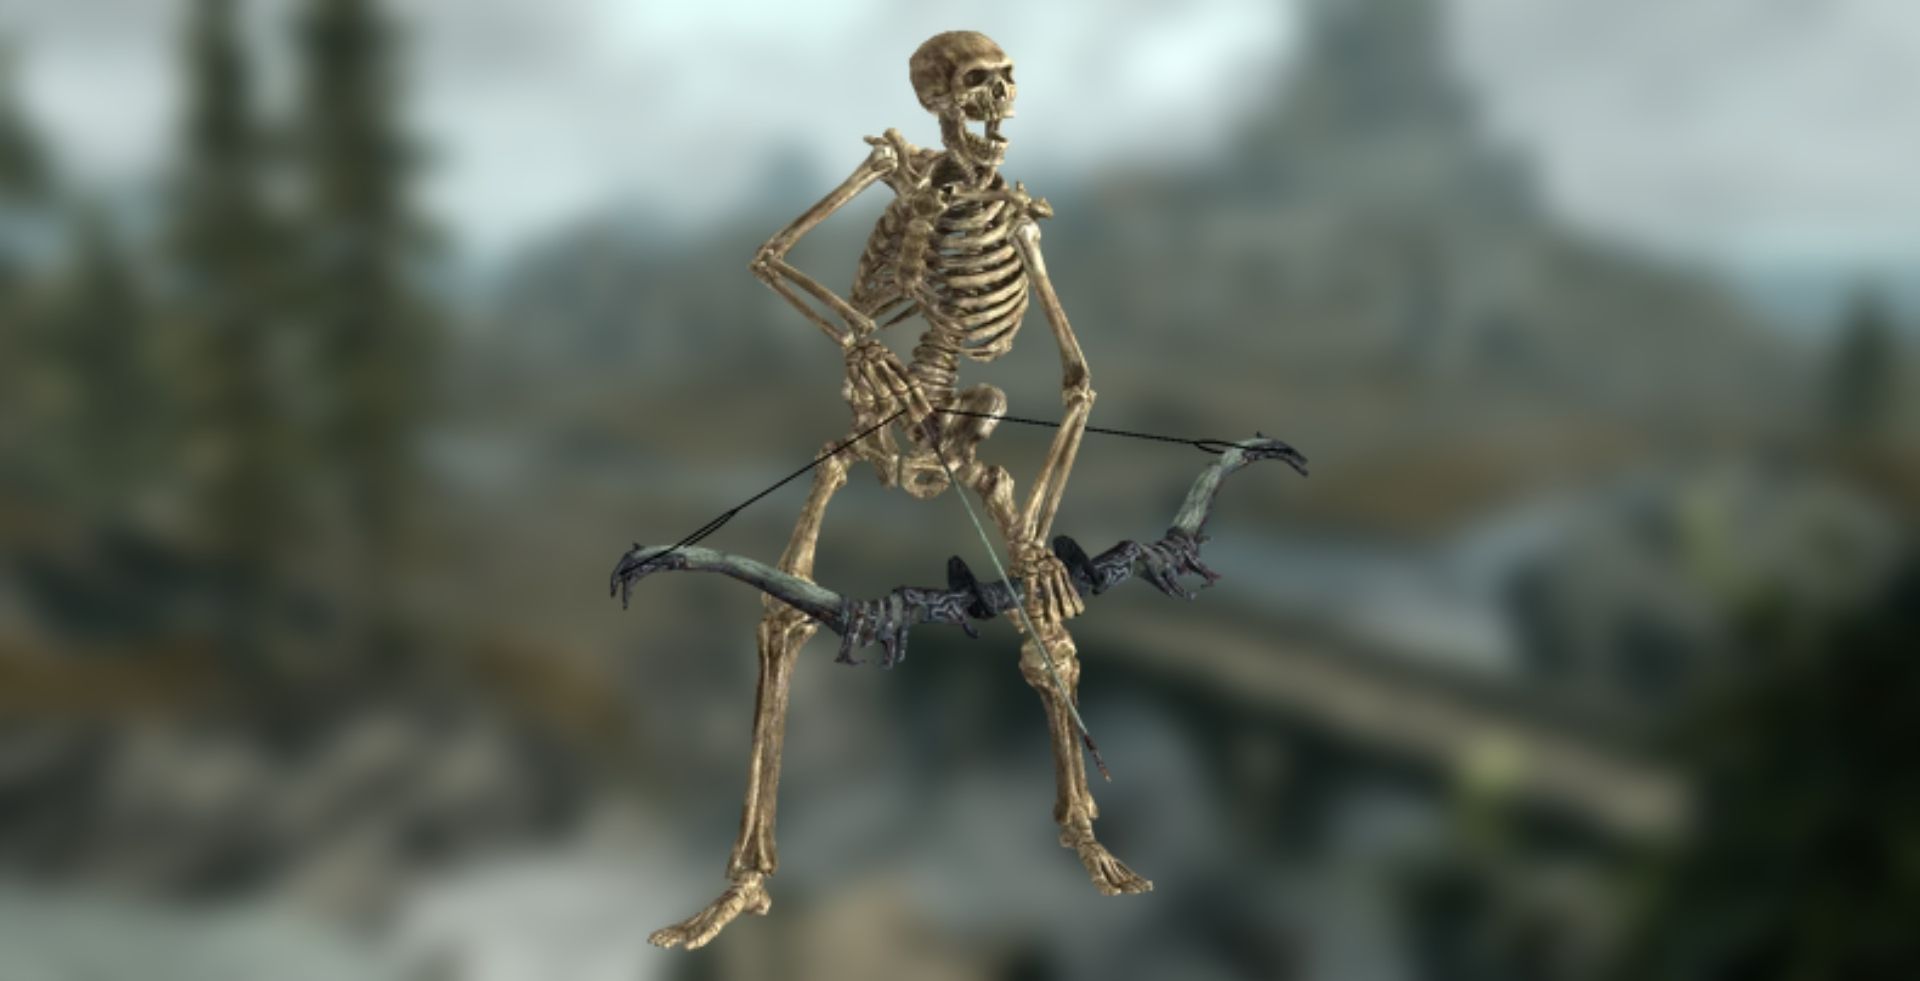 A render of a skeleton against a blurry screenshot of Skyrim.